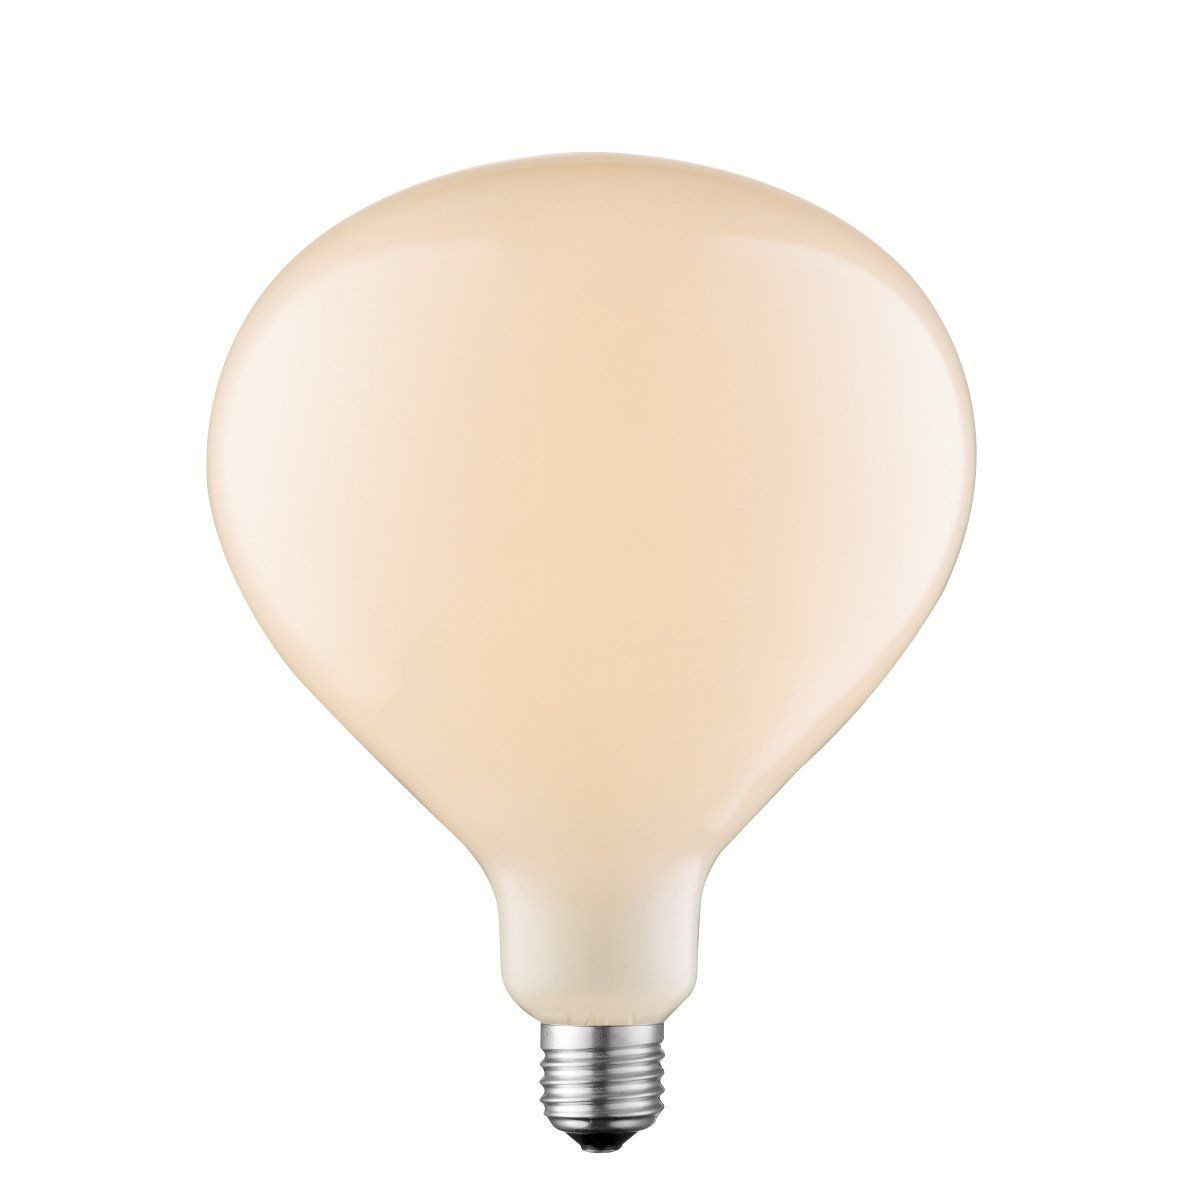 Edison Design LED lamp E27 LED filament lichtbron, Milky Globe 16/16/20.5cm, Wit, LED lamp Dimbaar, 6W 510lm 2700K, warm wit licht, geschikt voor E27 fitting